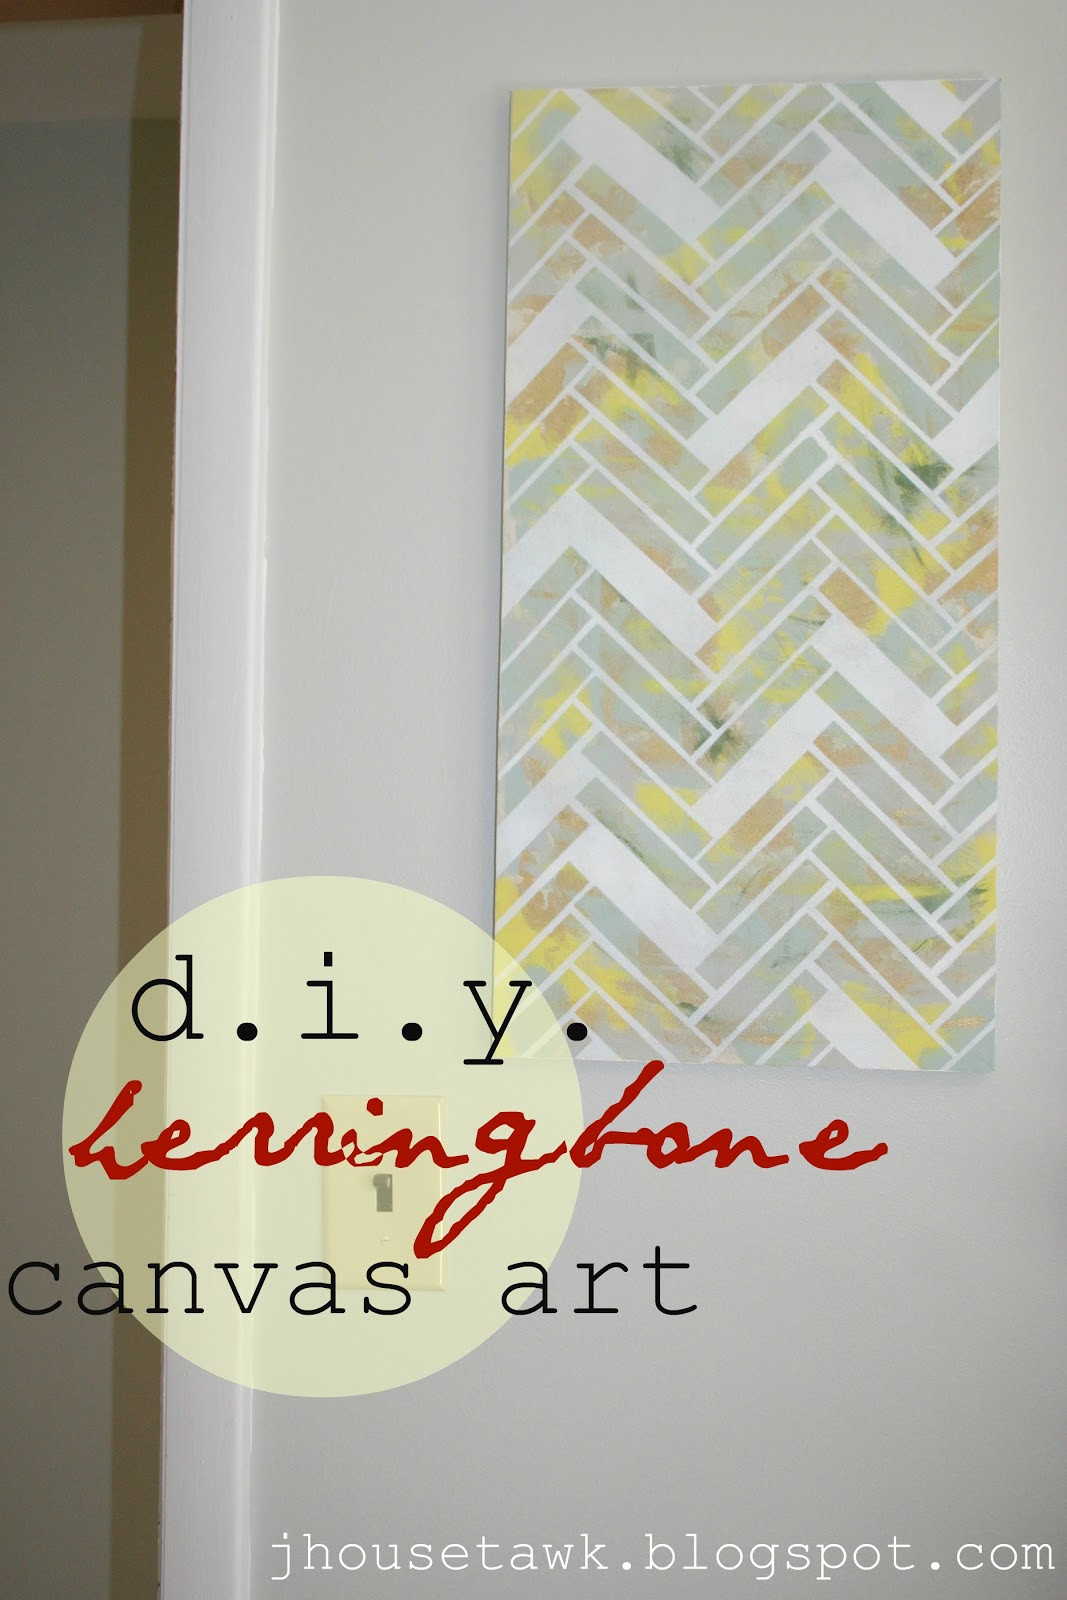 Best ideas about Canvas Art DIY
. Save or Pin J House Tawk DIY Herringbone Canvas Art Now.